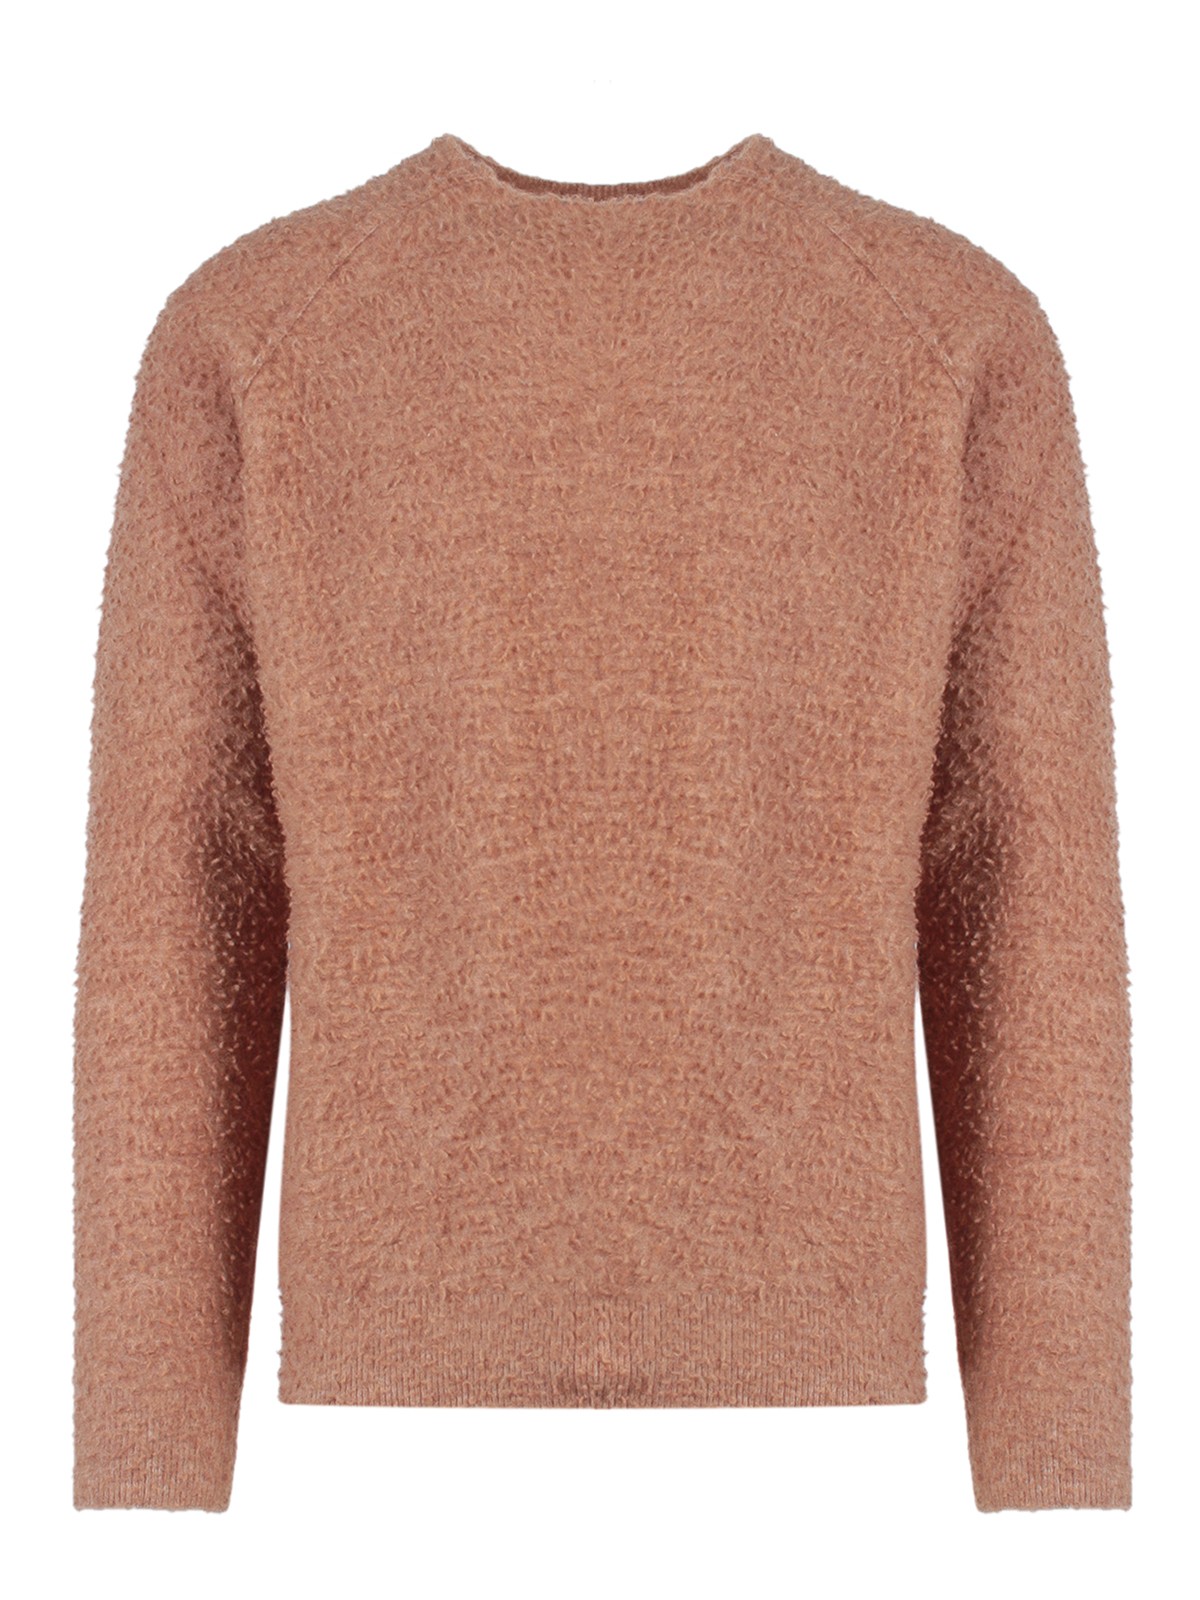 Original Vintage Style Sweater In Brown